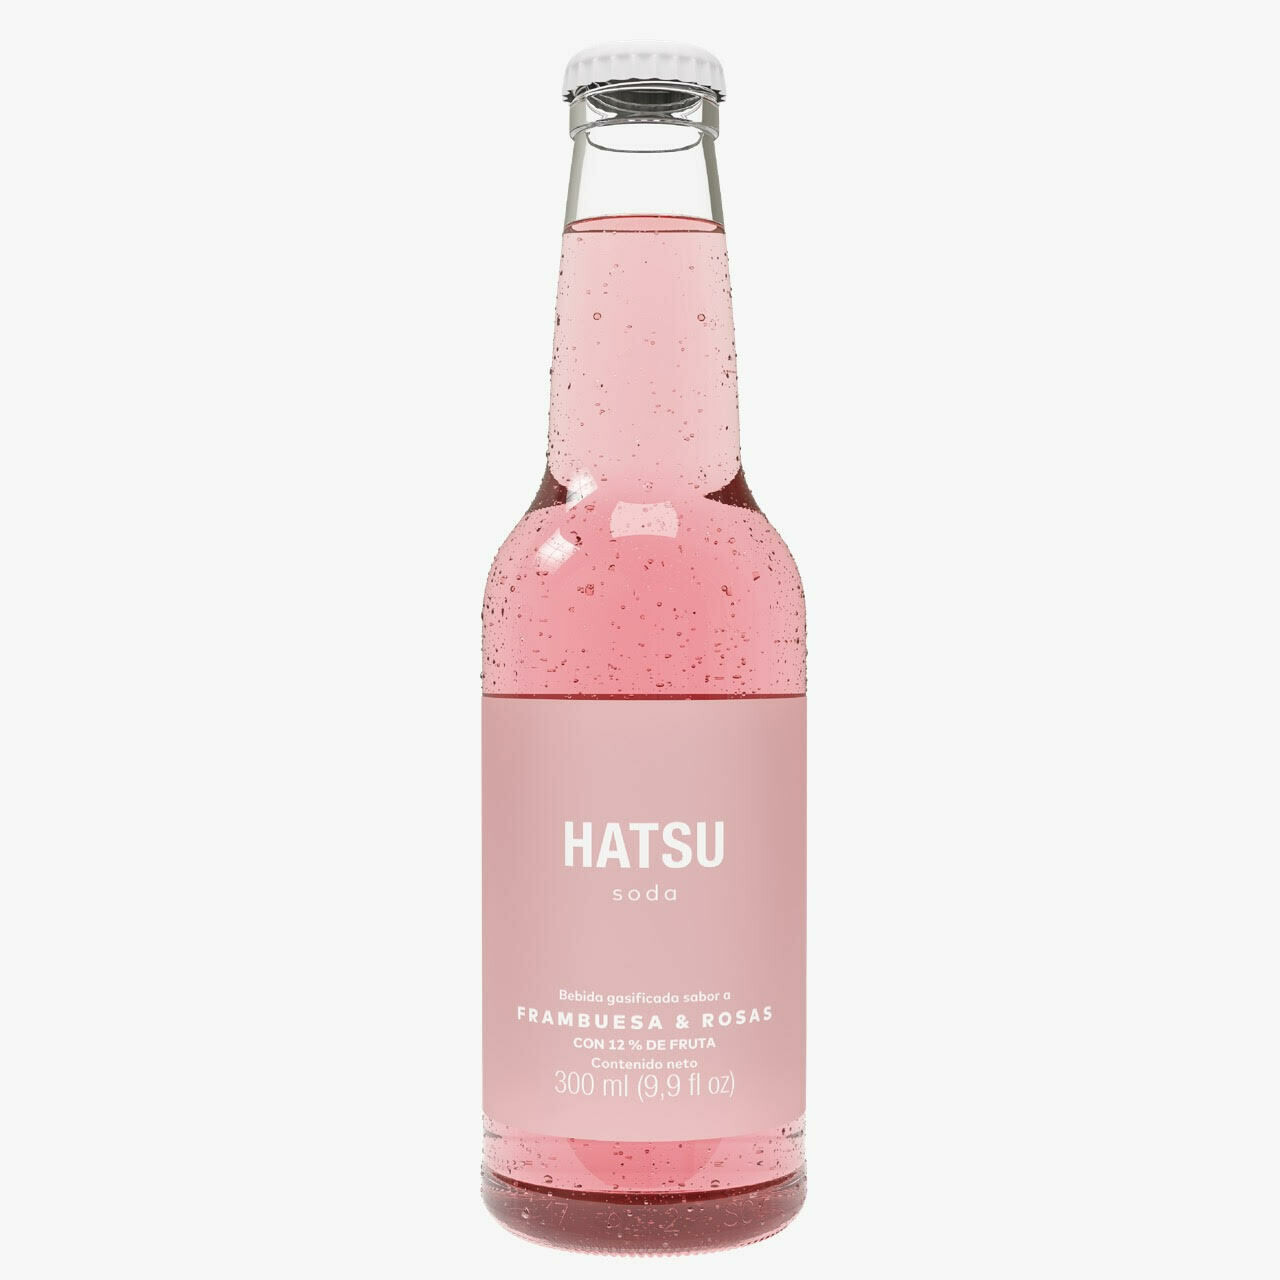 Soda Frambuesa y Rosas HATSU 300ml